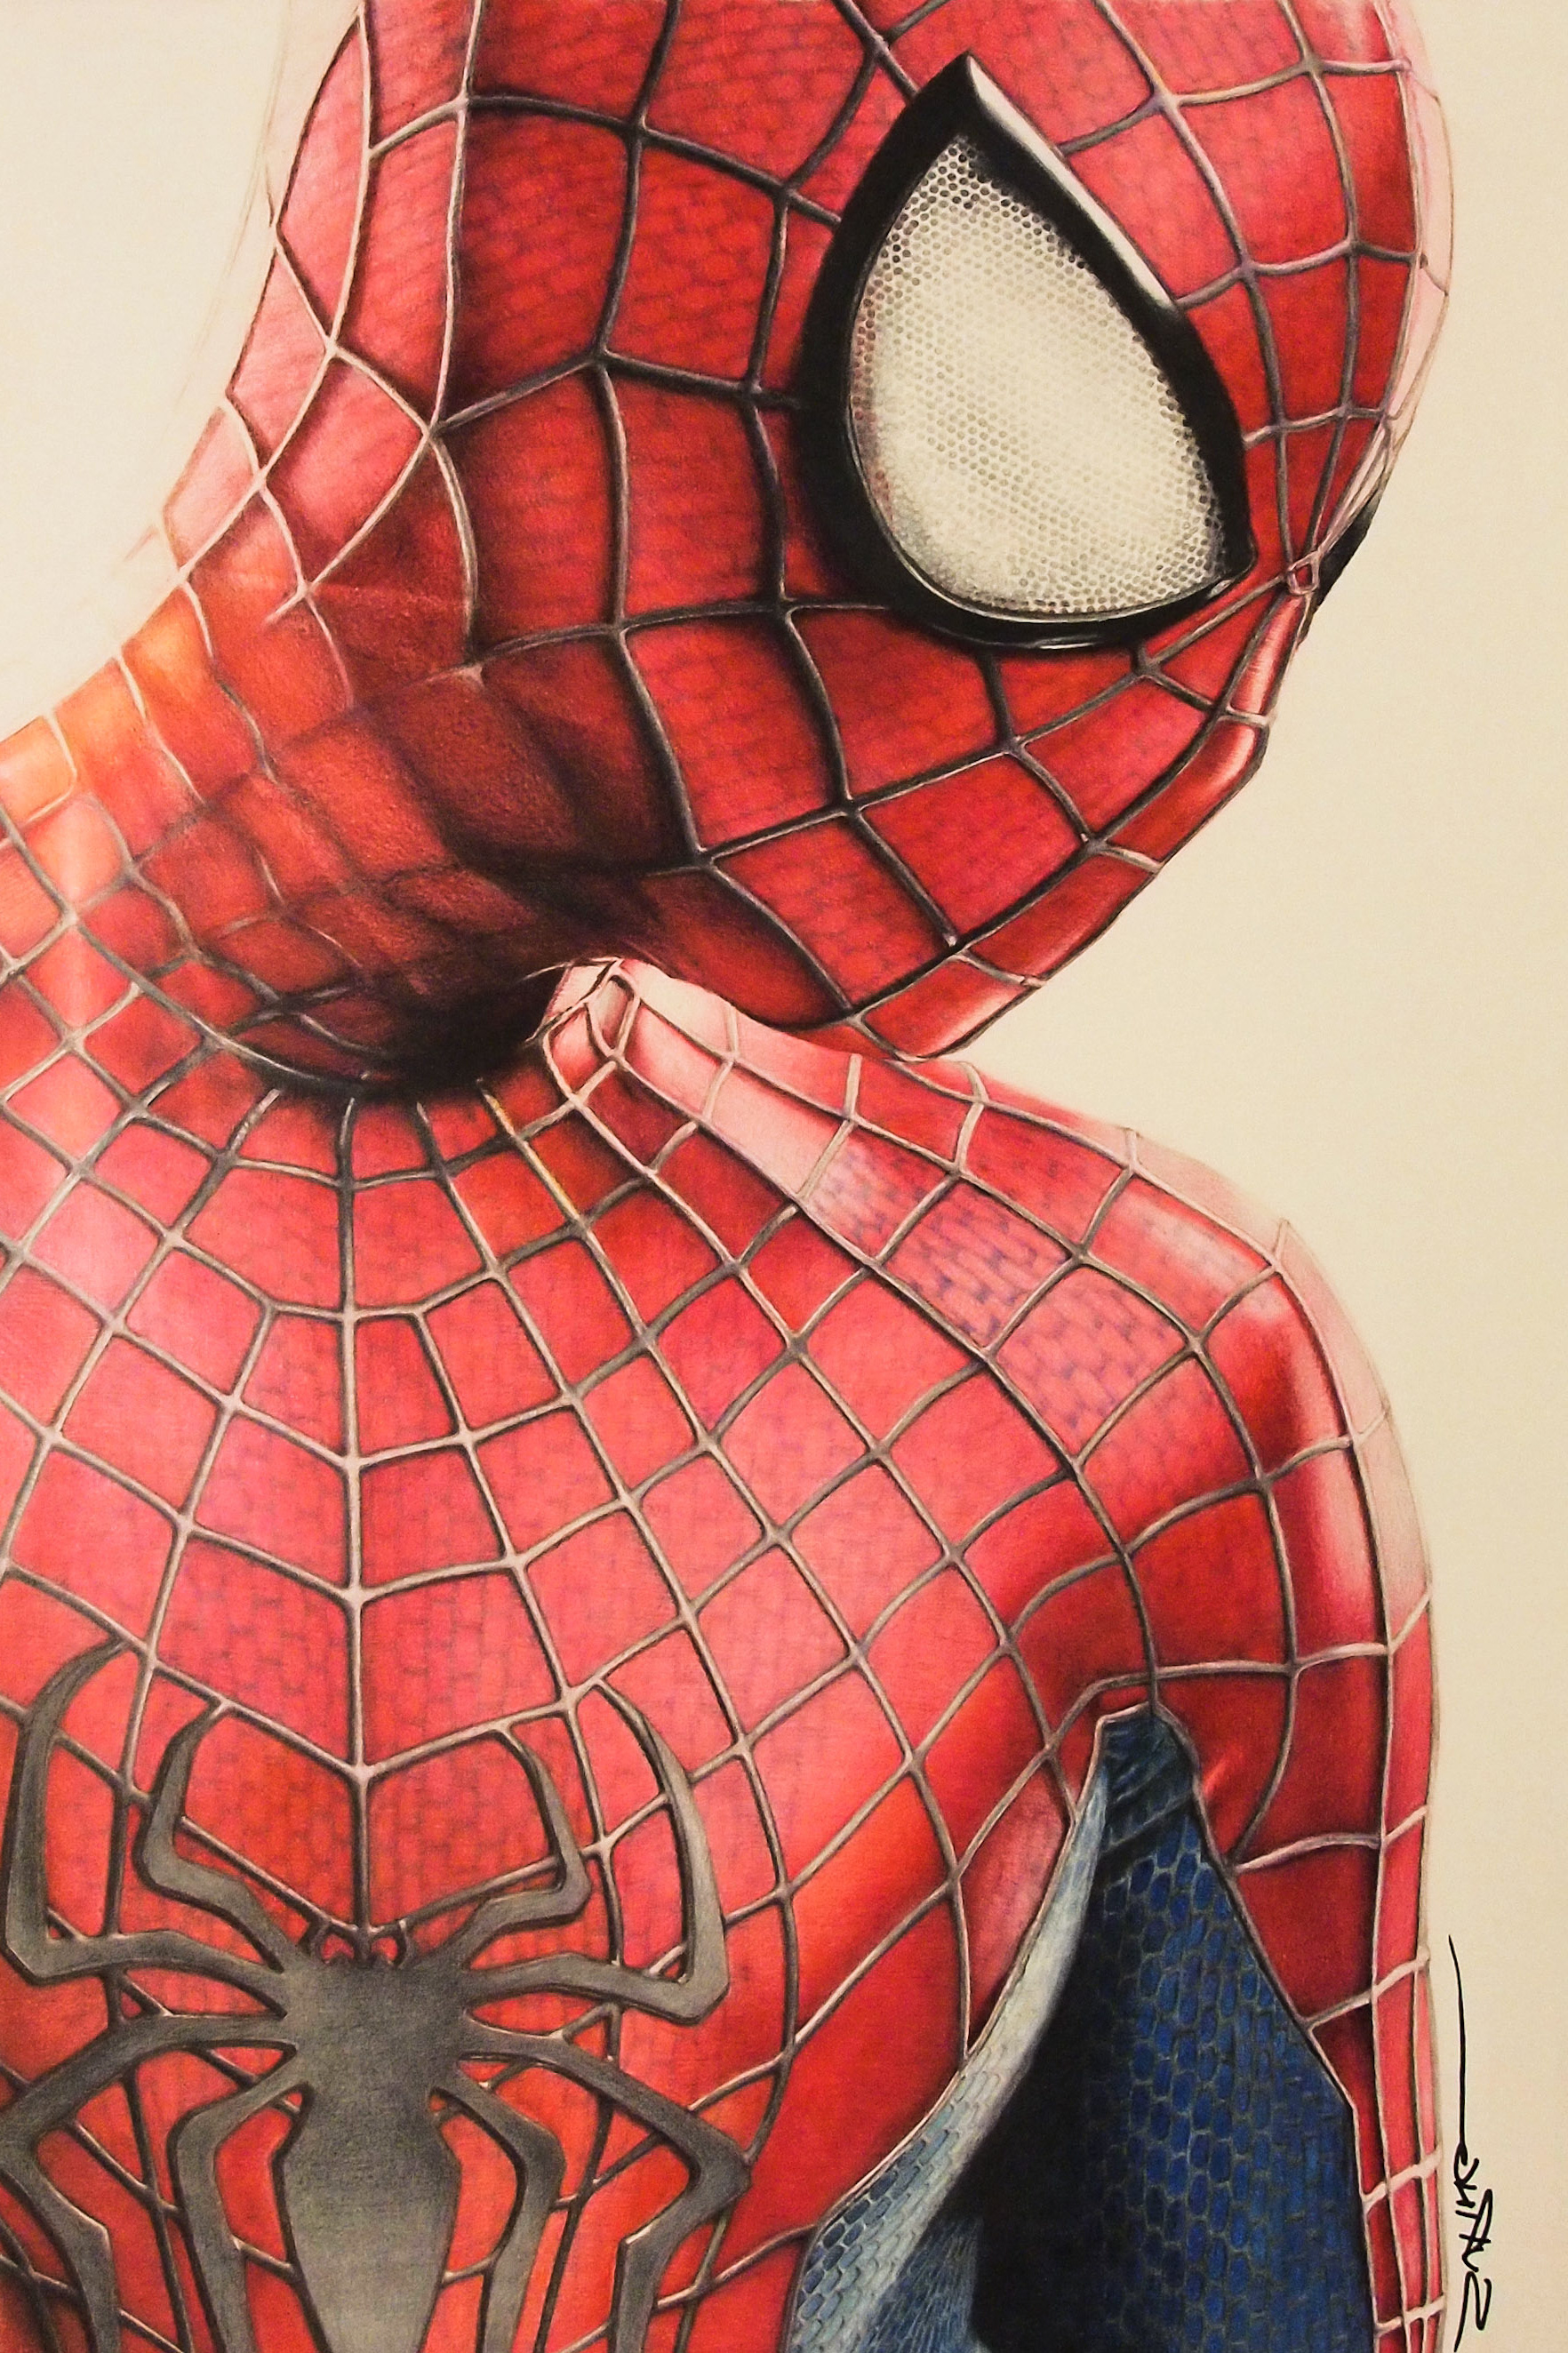 Drawn spider man colored